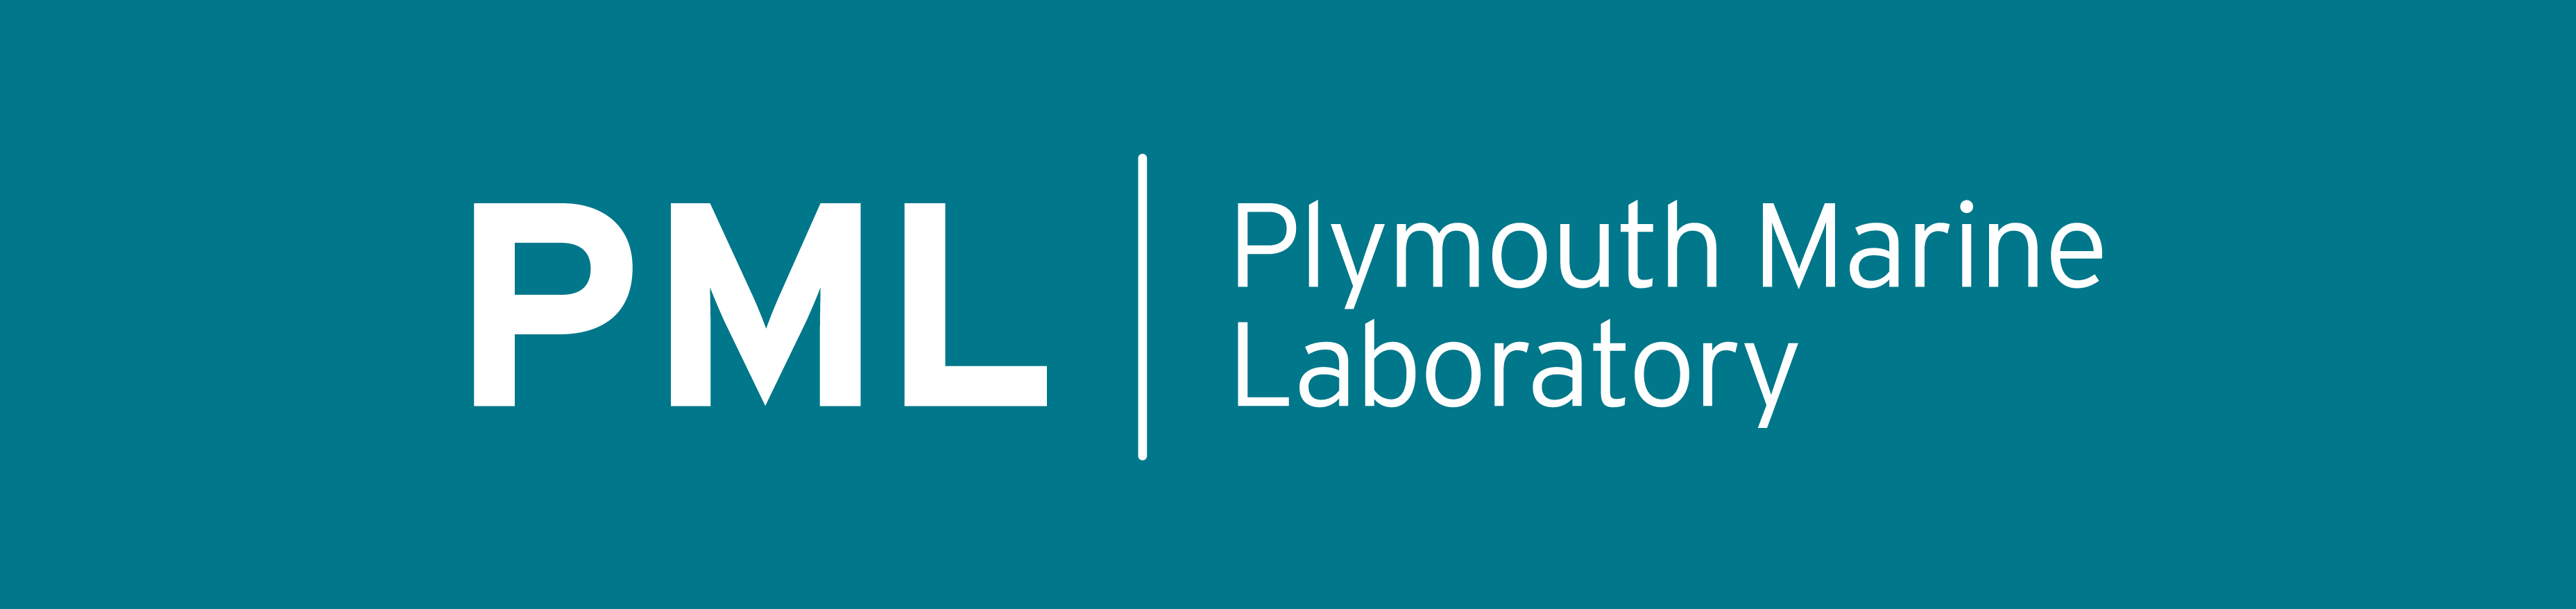 plymouth-marine-laboratory